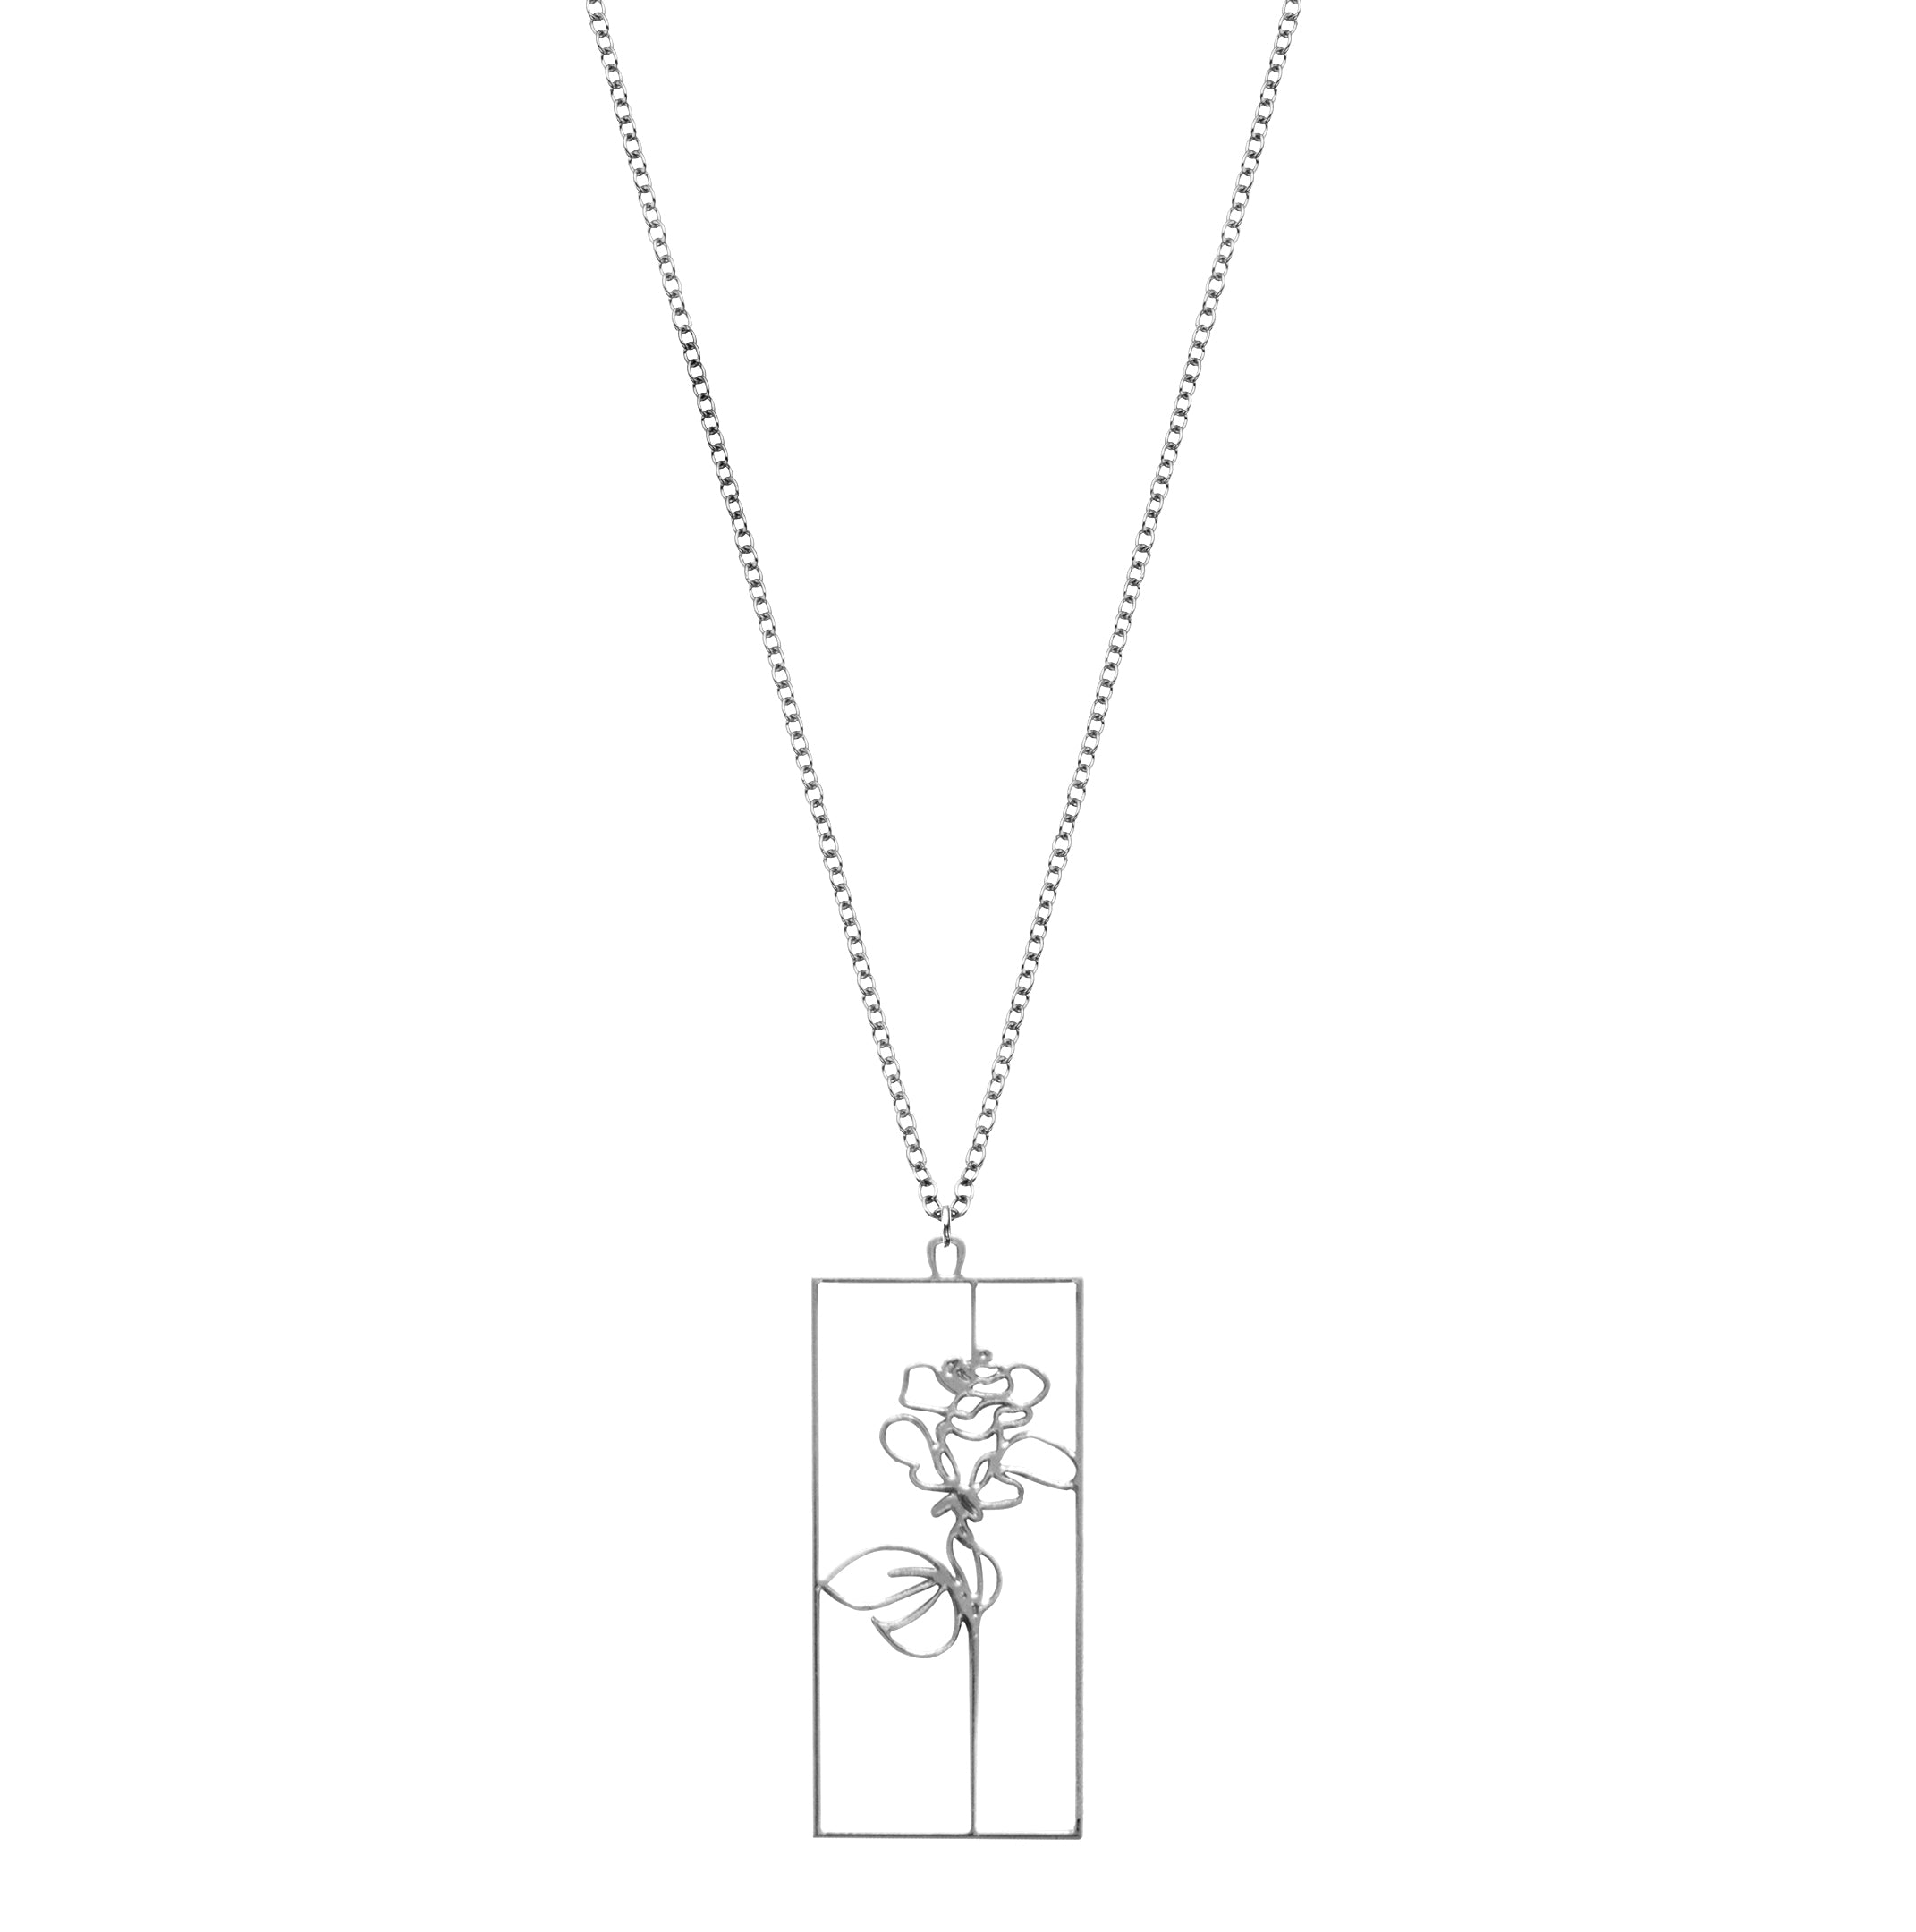 Art Jewelry - Hand Drawn Flower Necklace